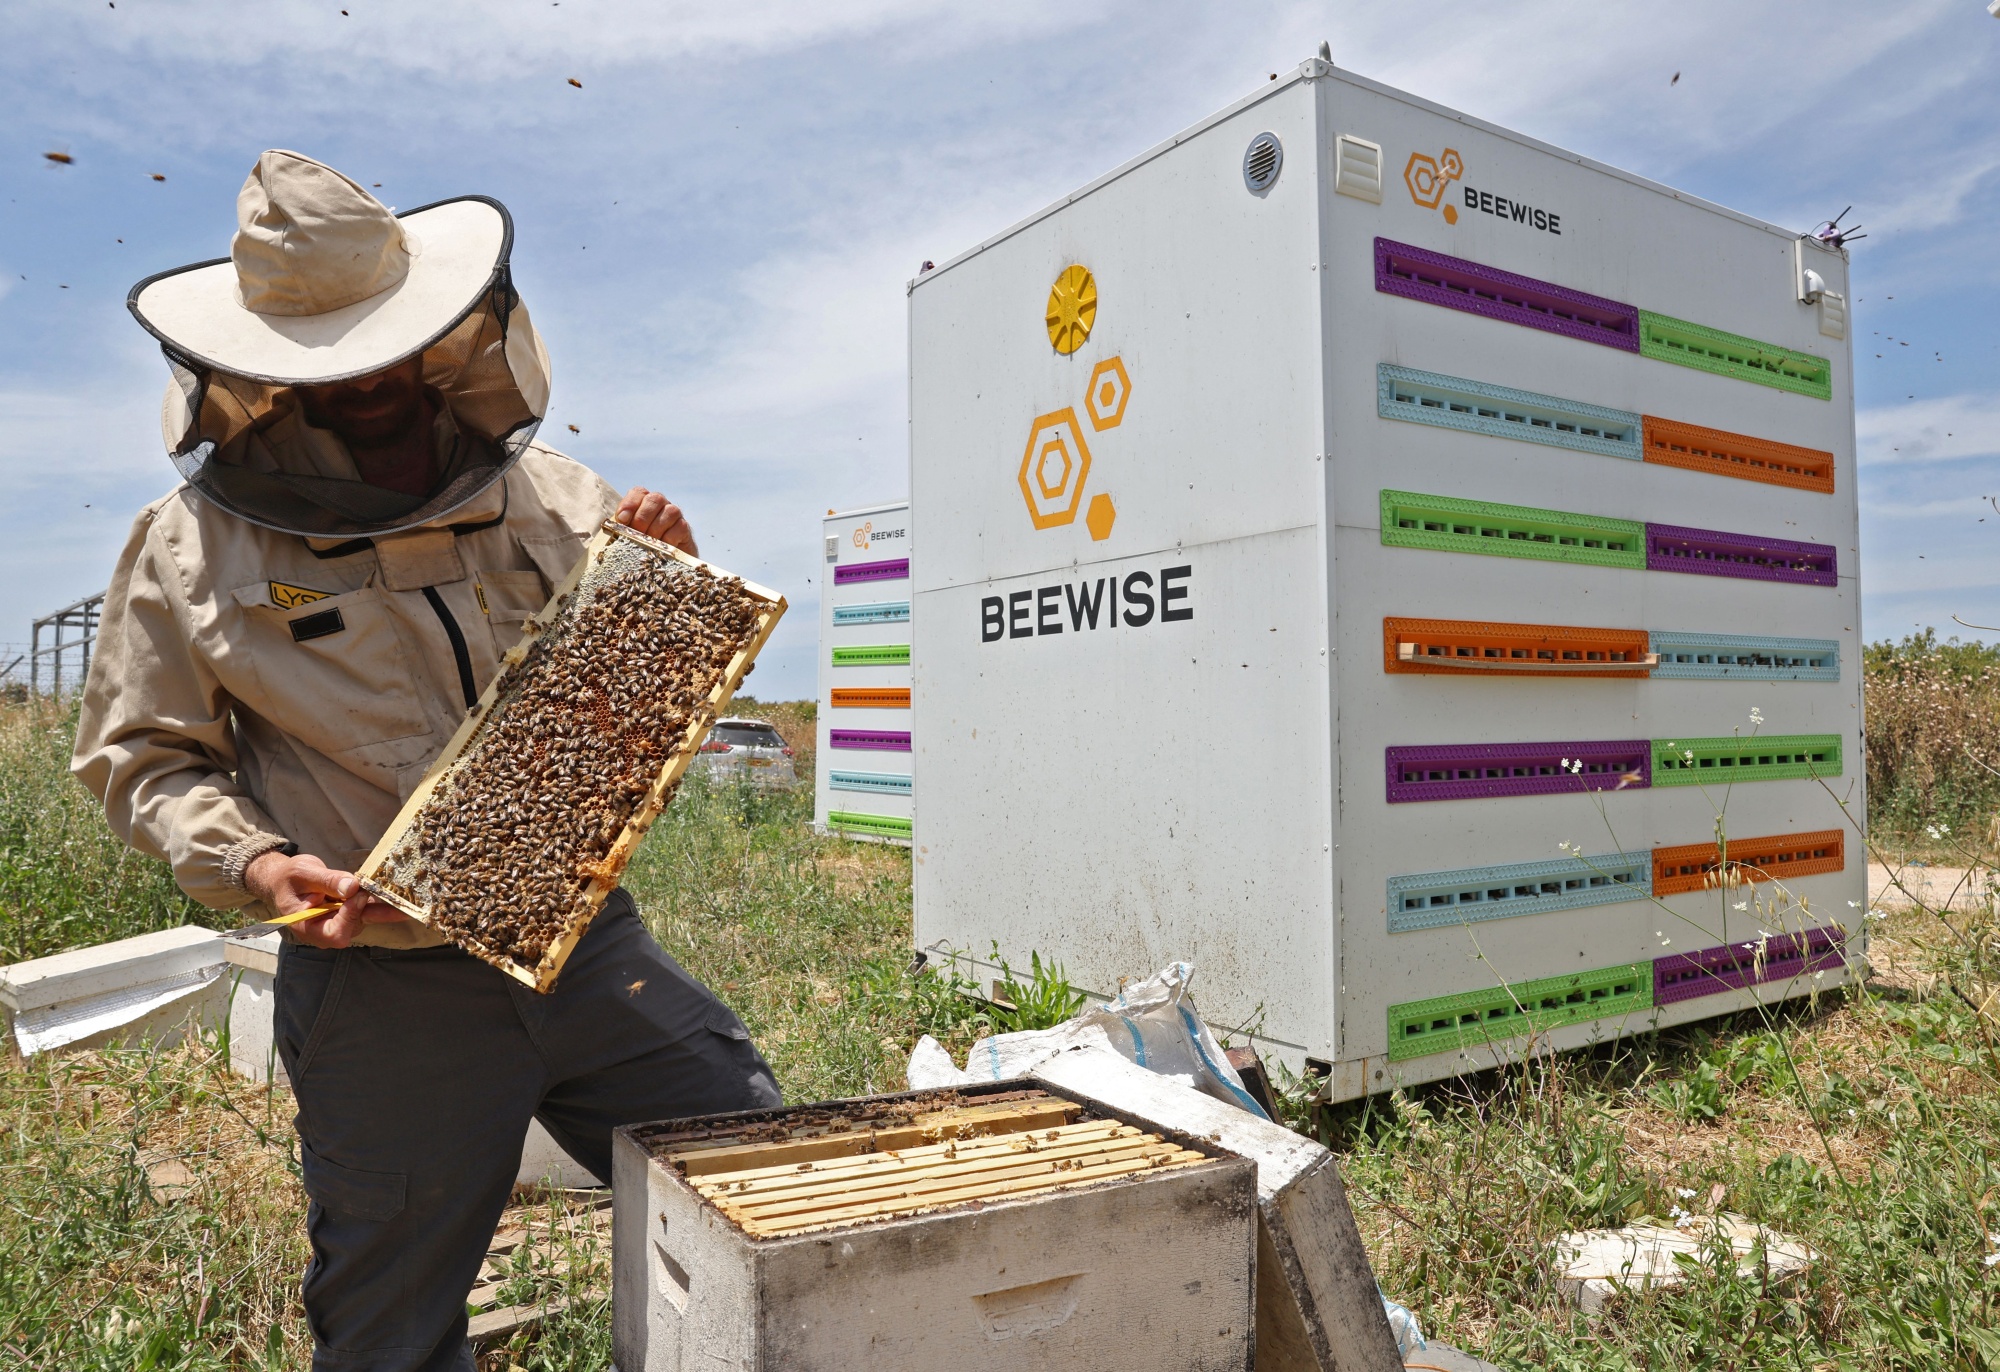 Beekeeper Career Profile and Job Outlook